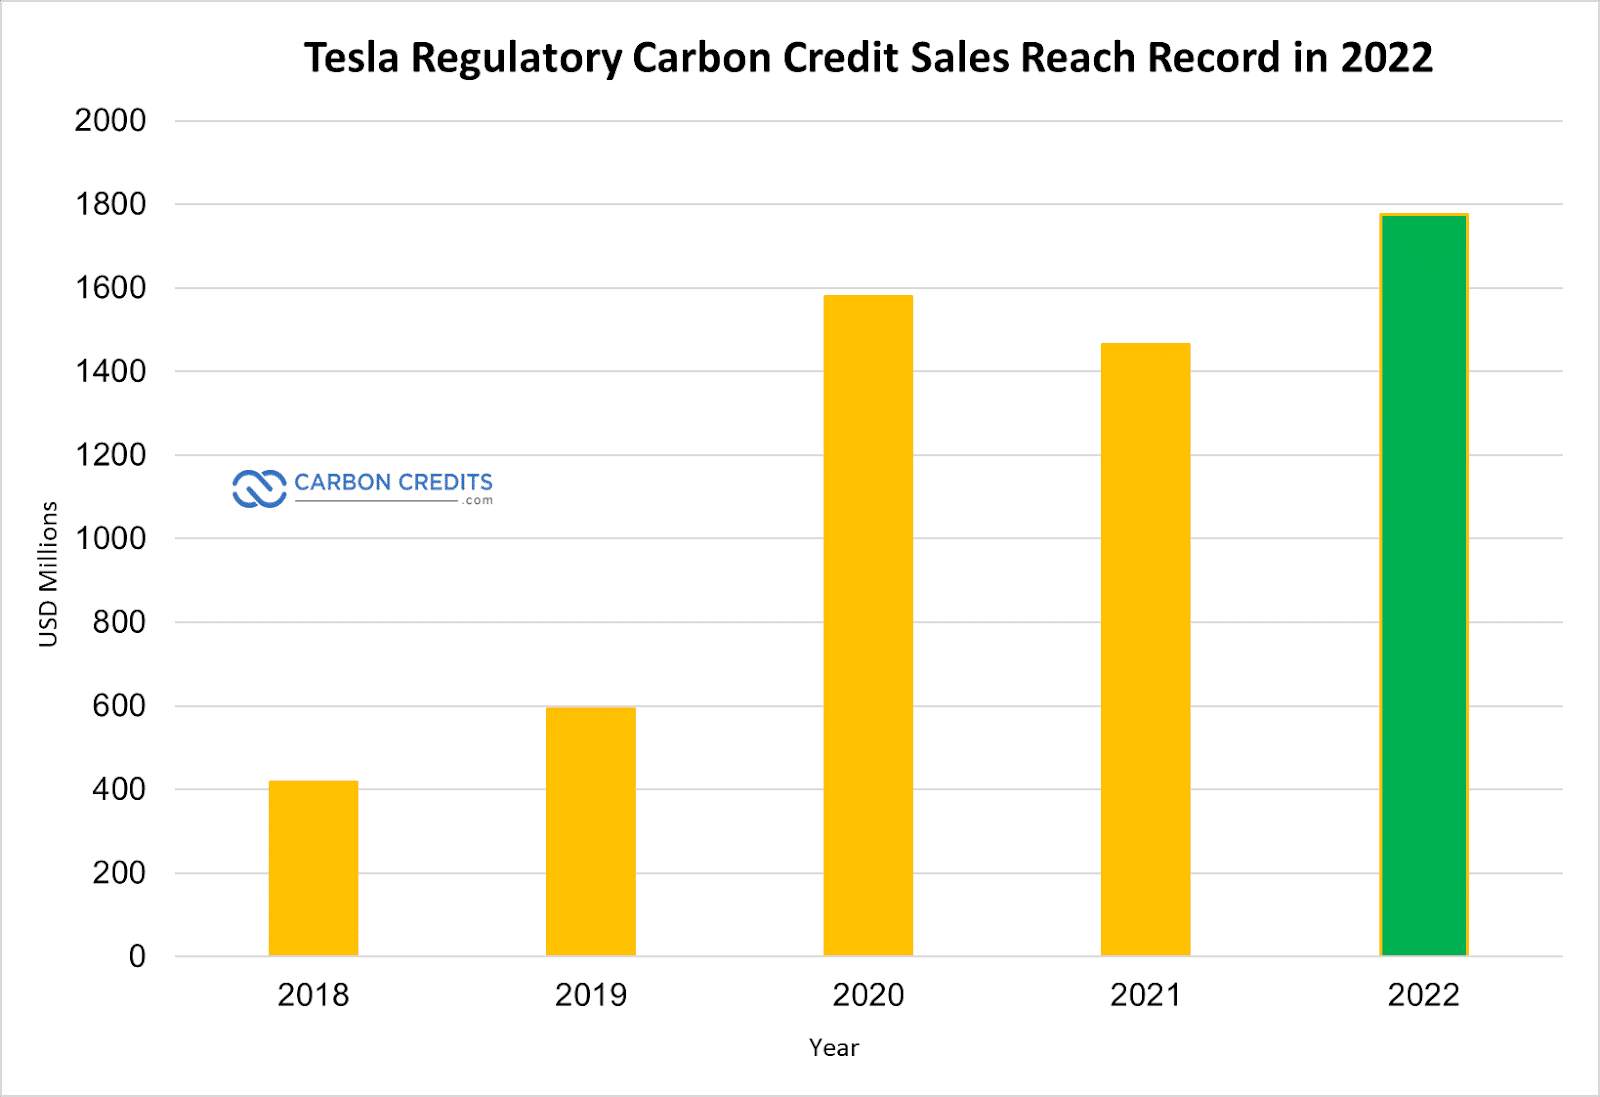 Les ventes de crédits carbone Tesla atteignent un record de 1.78 milliard de dollars en 2022